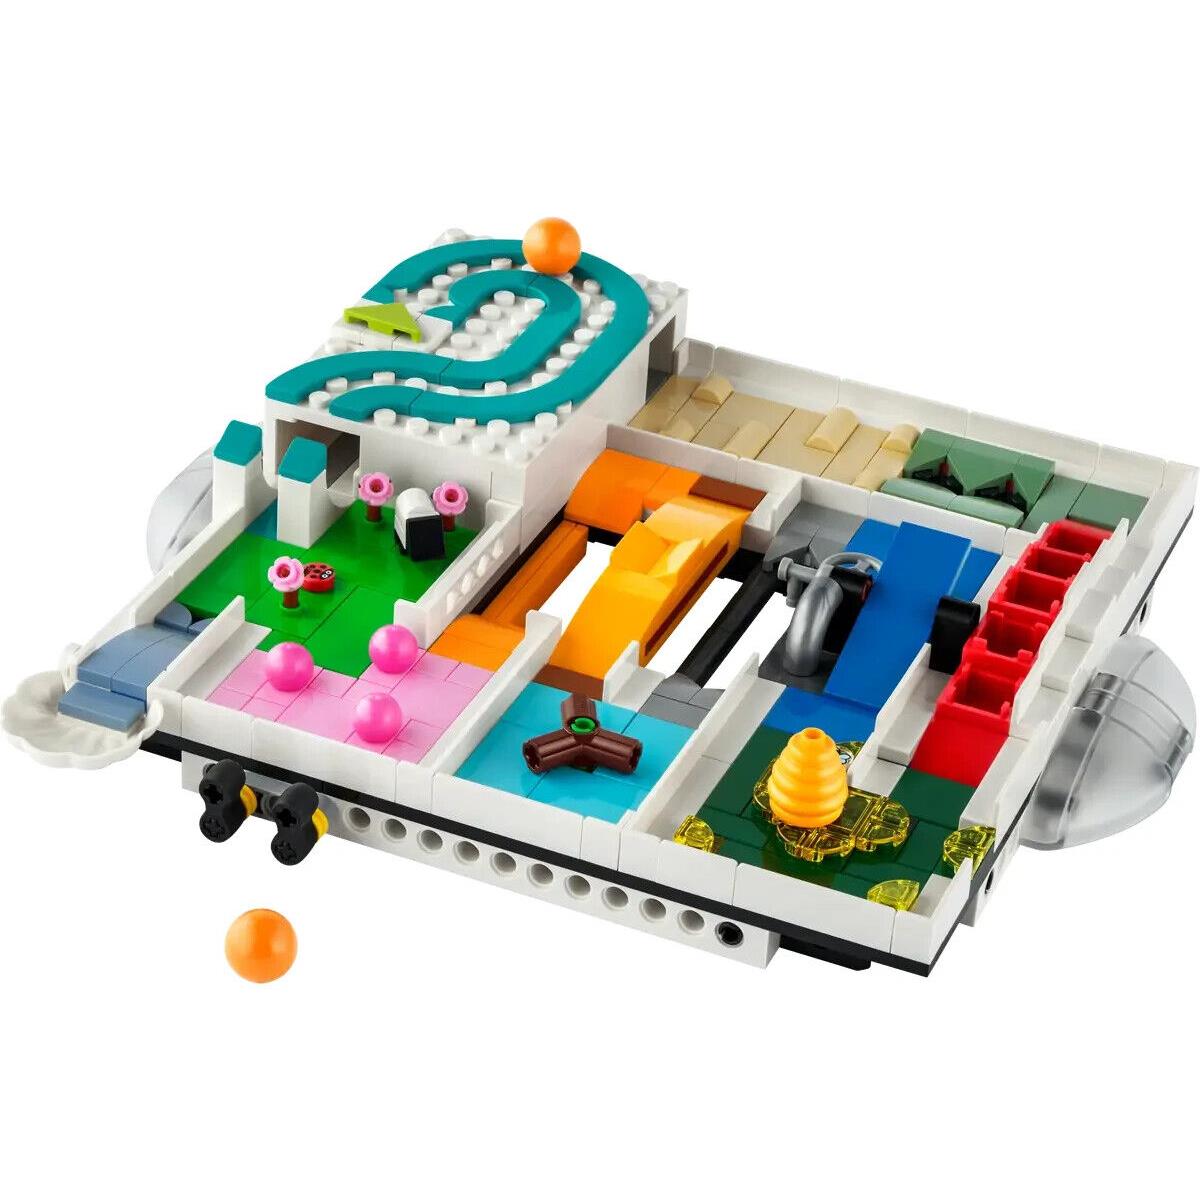 Lego 40596 Magic Maze - Limited Edition